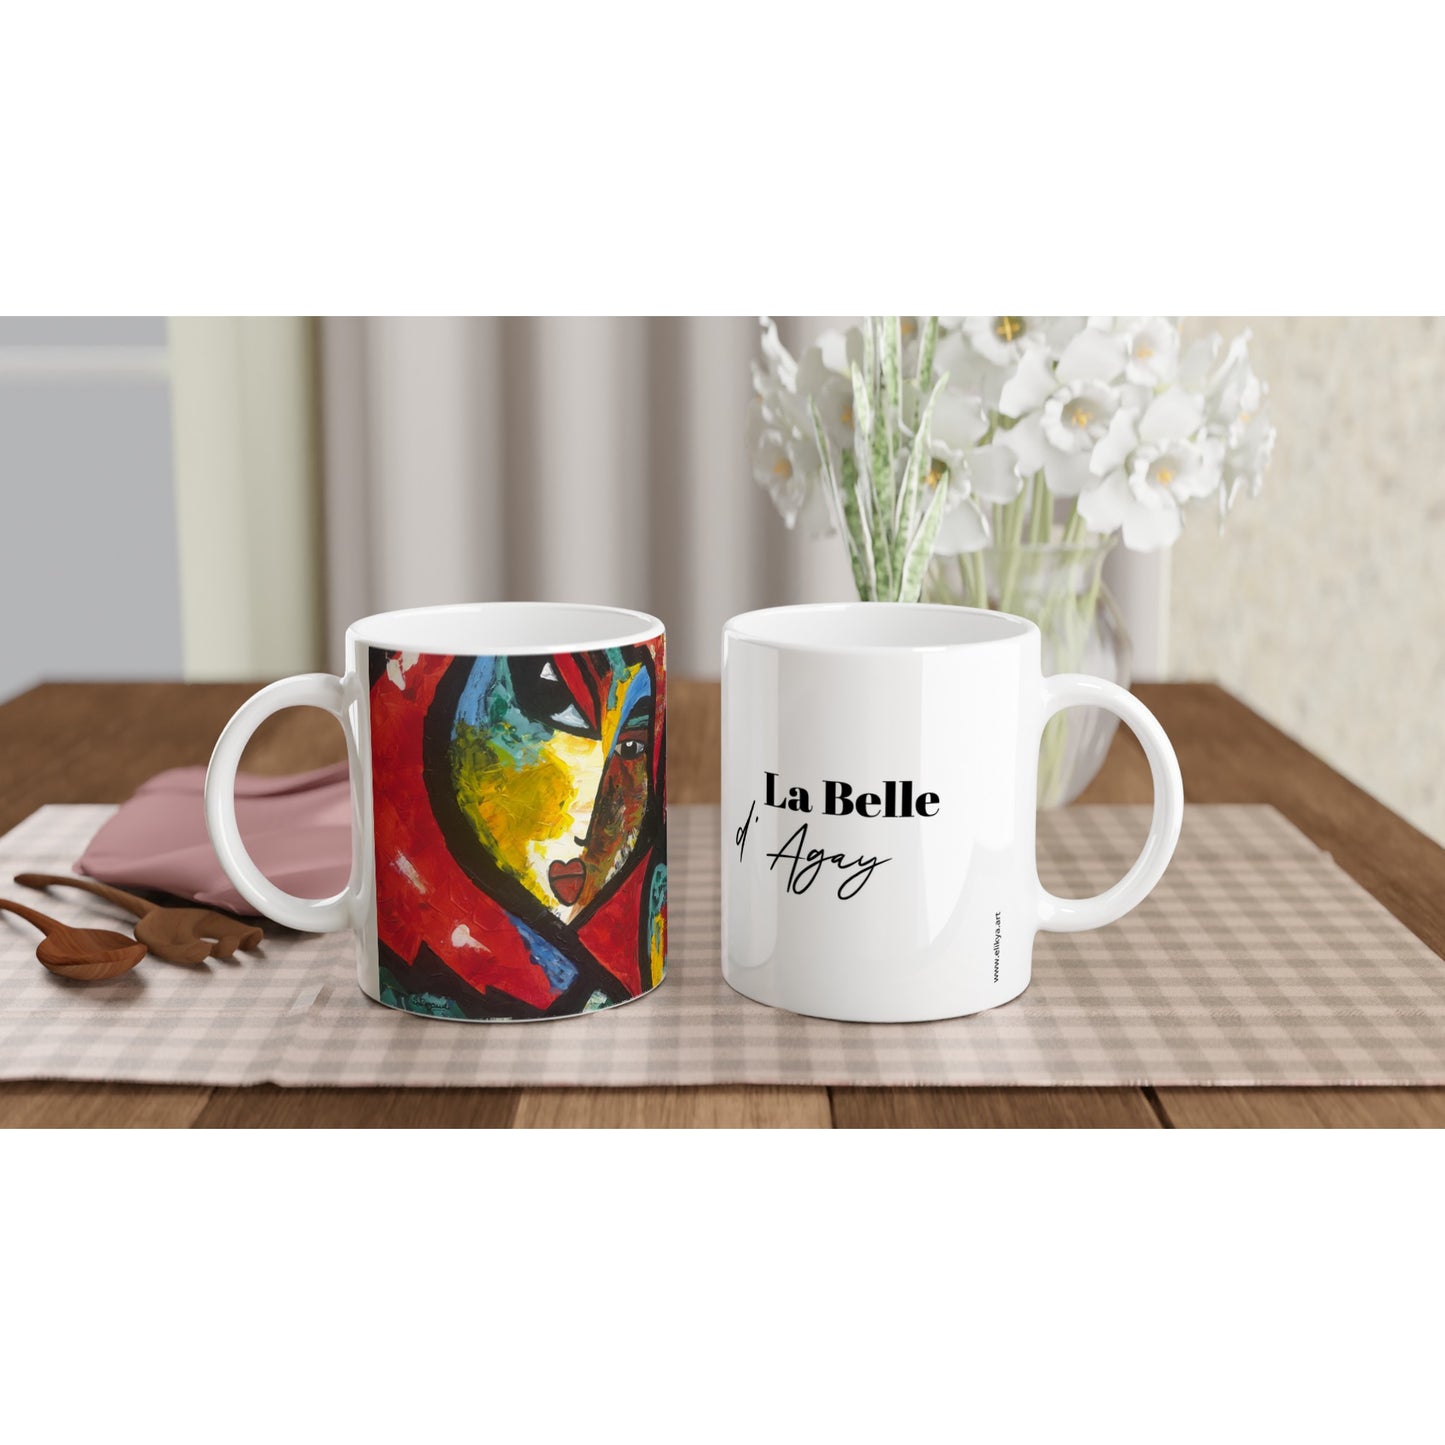 "La Belle d'Agay" Ceramic Mug